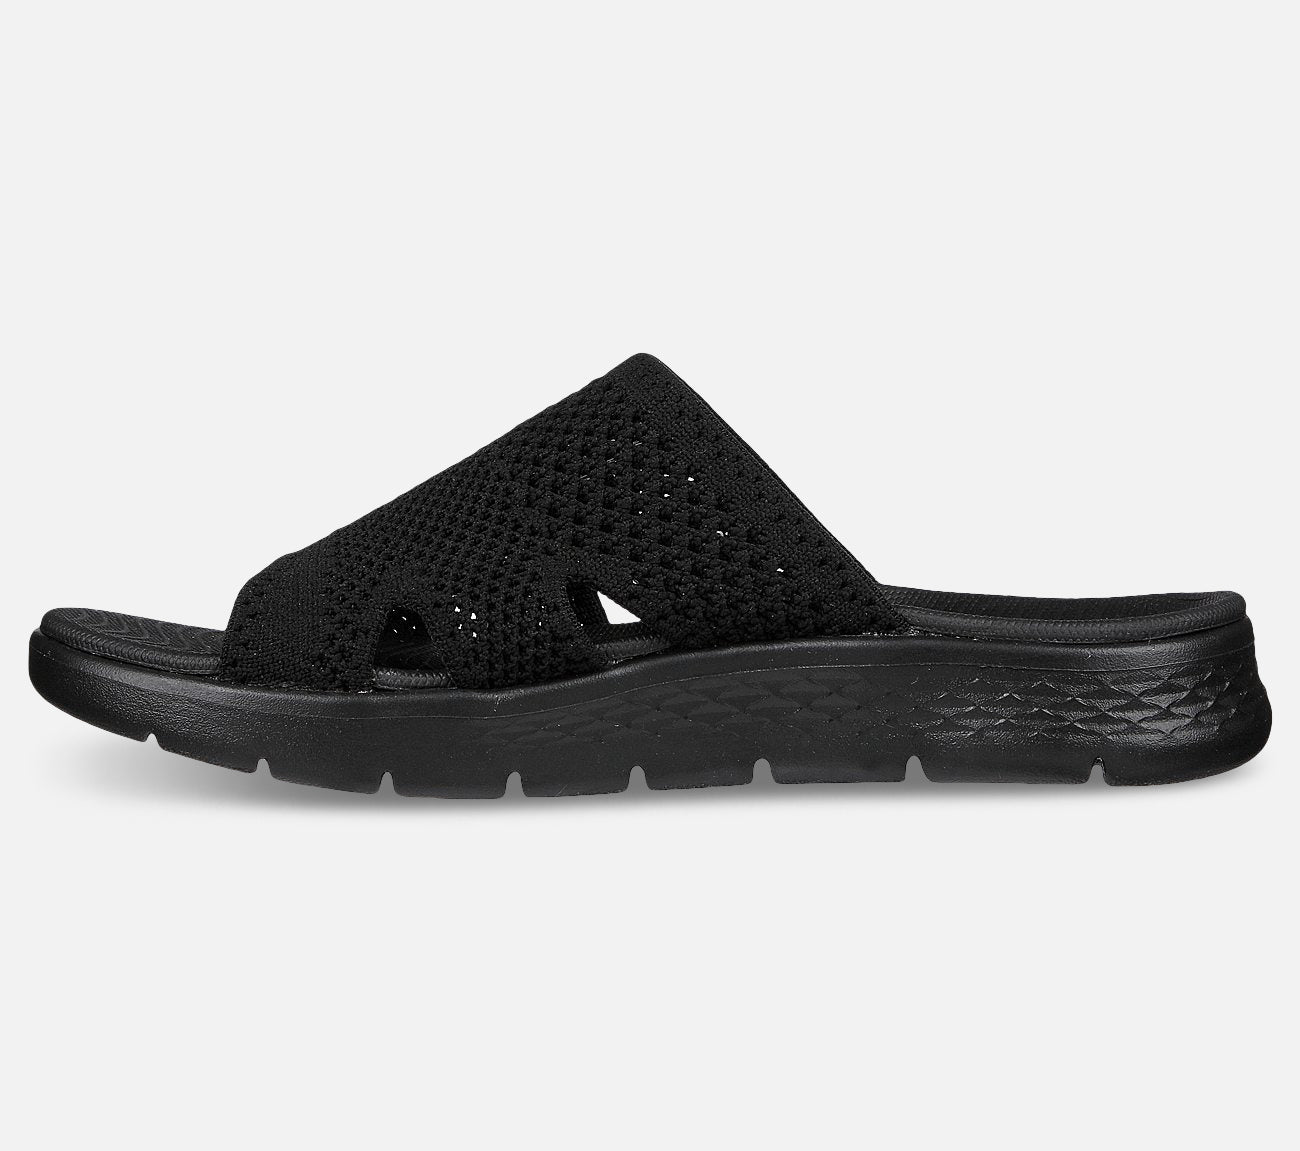 GO WALK Flex - Elation Sandal Skechers